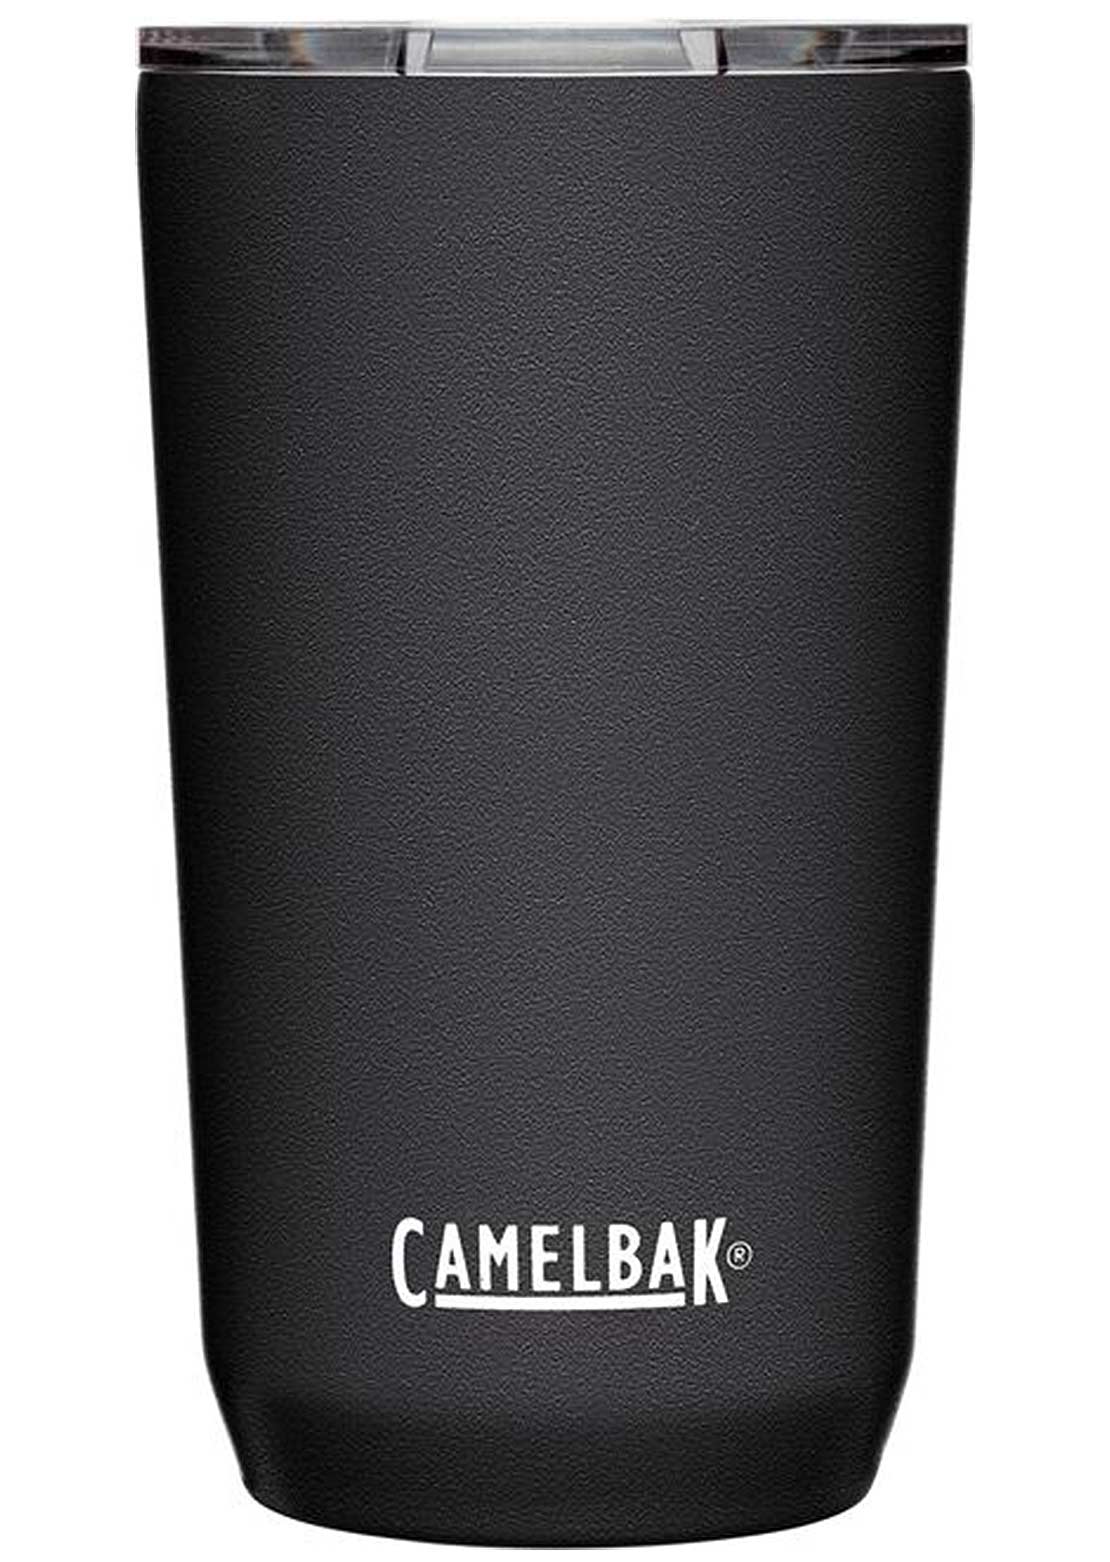 Camelbak Stainless Steel Vacuum Insulated 16 oz Tumbler Black